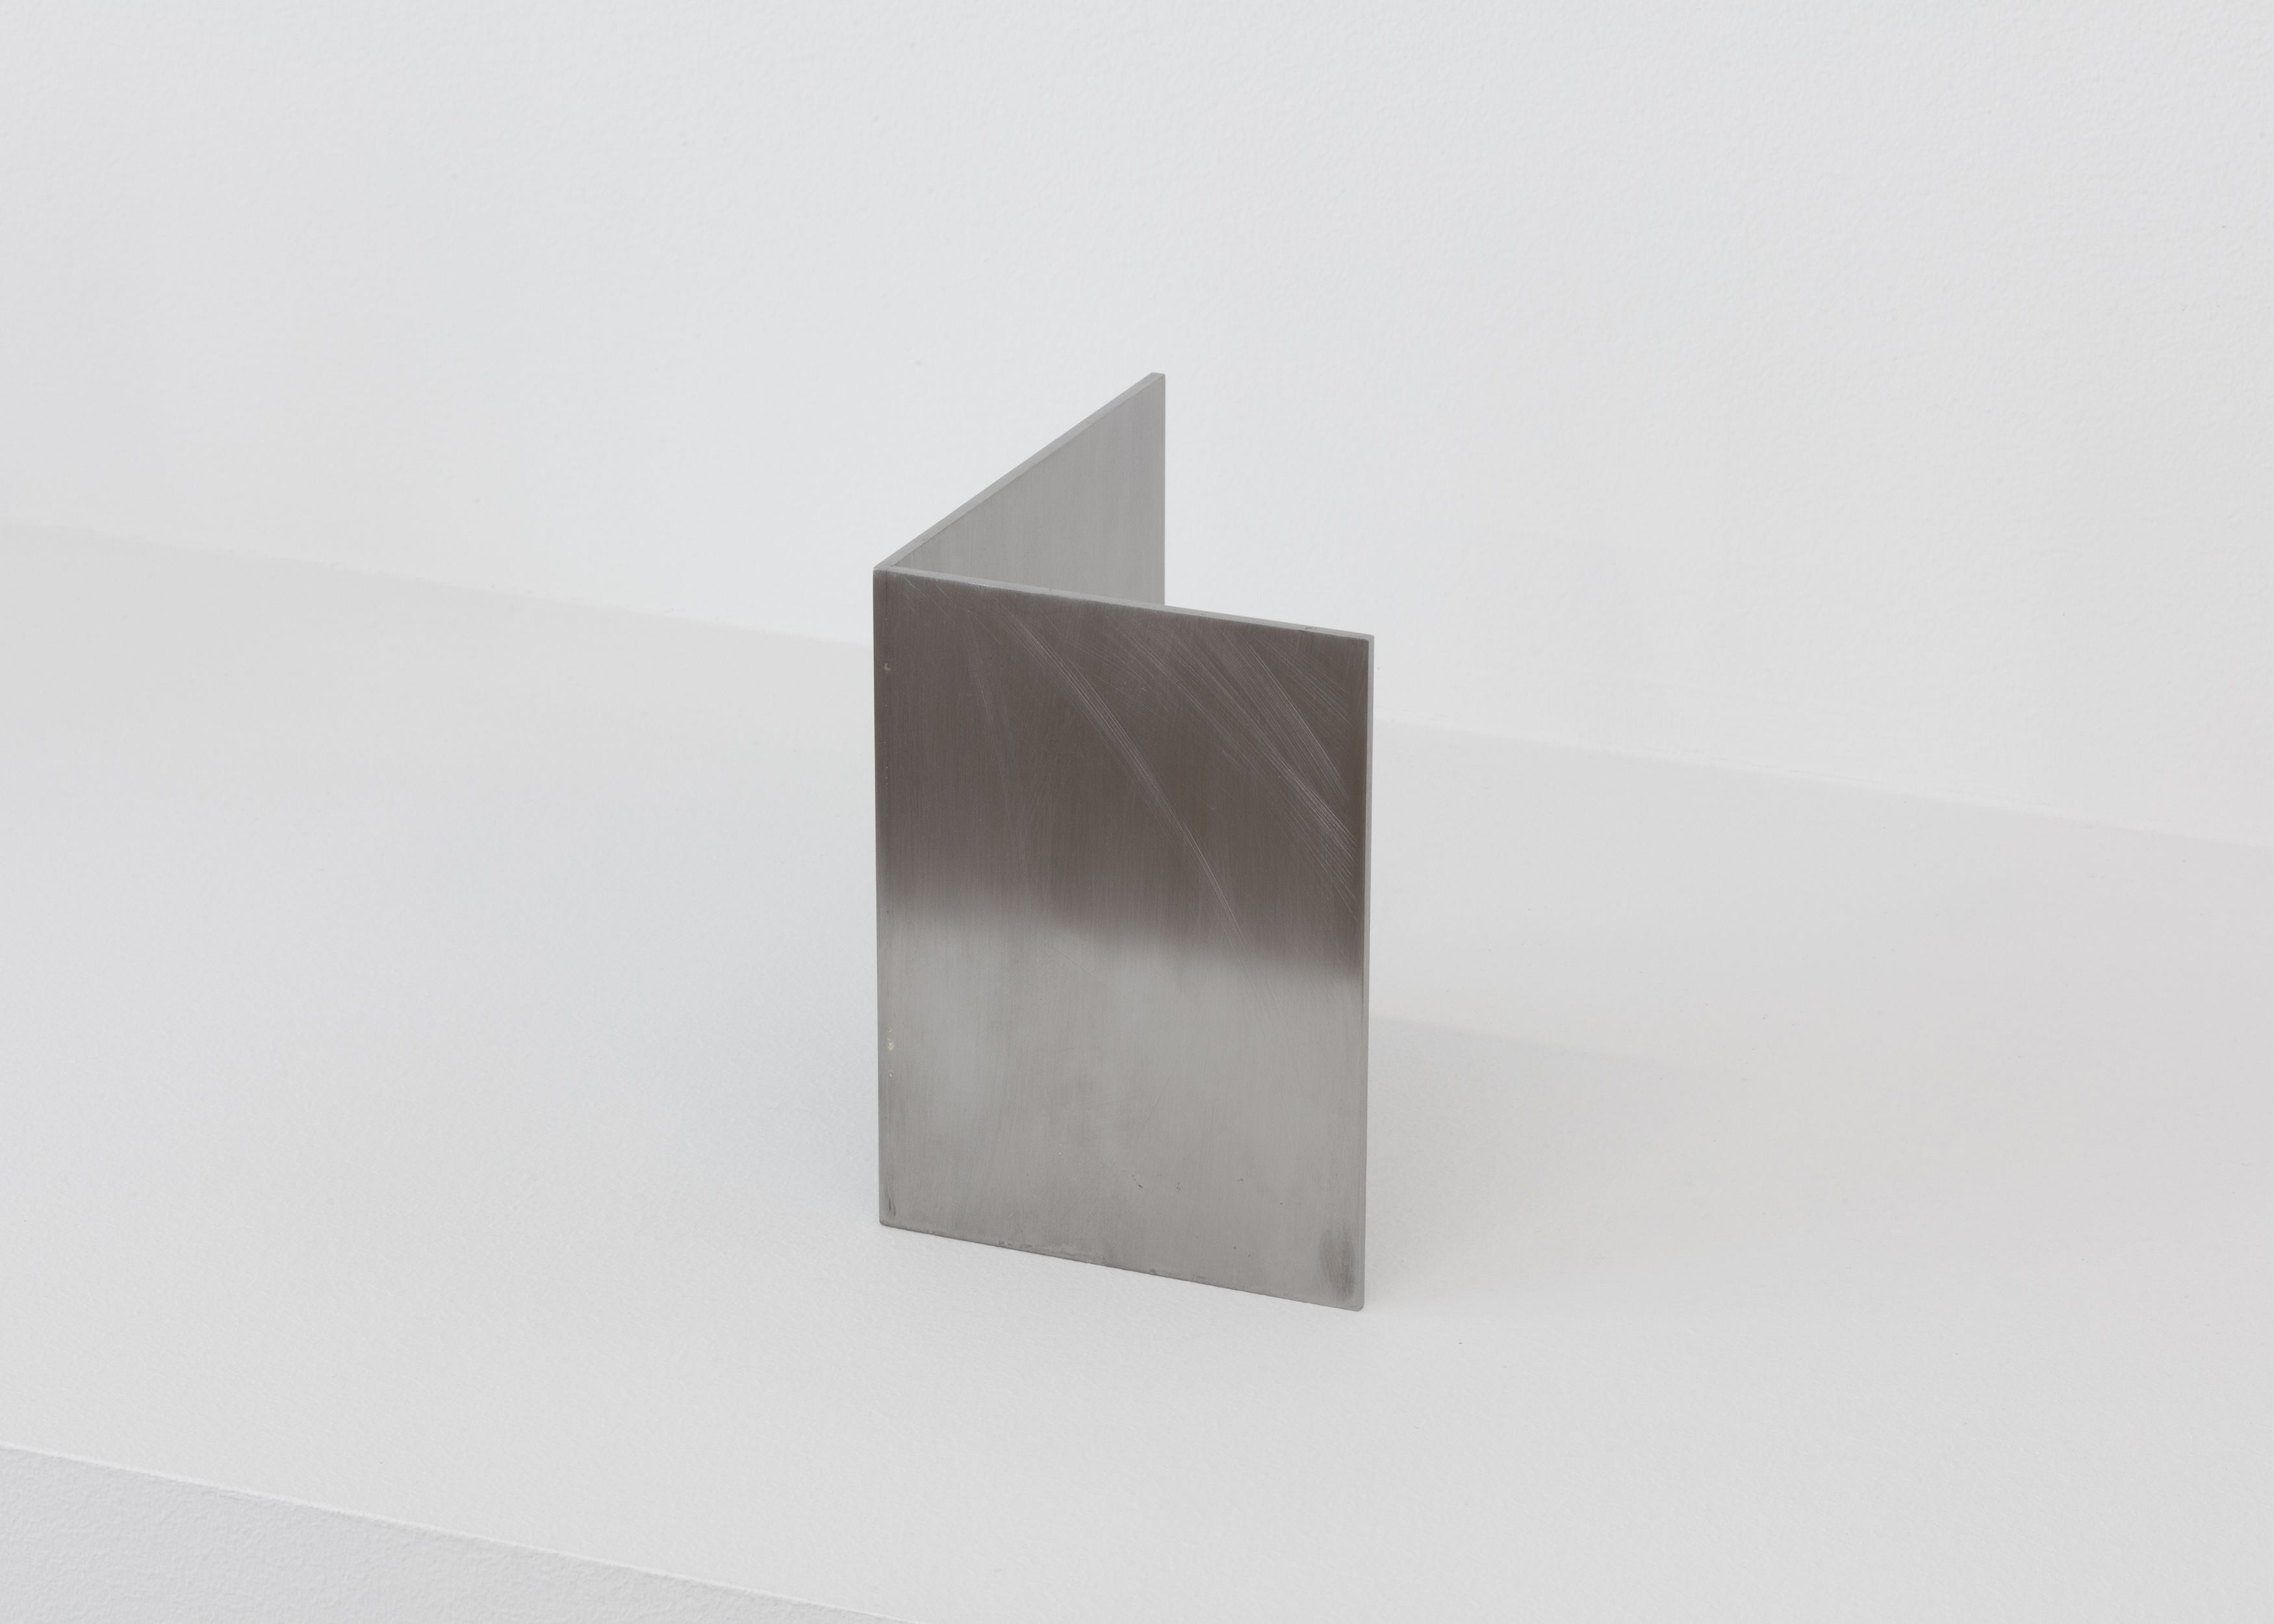 Stephen Lichty, Form 6, 2021, stainless steel, 4 x 4 x 3 in. (10.16 x 10.16 x 7.62 cm)